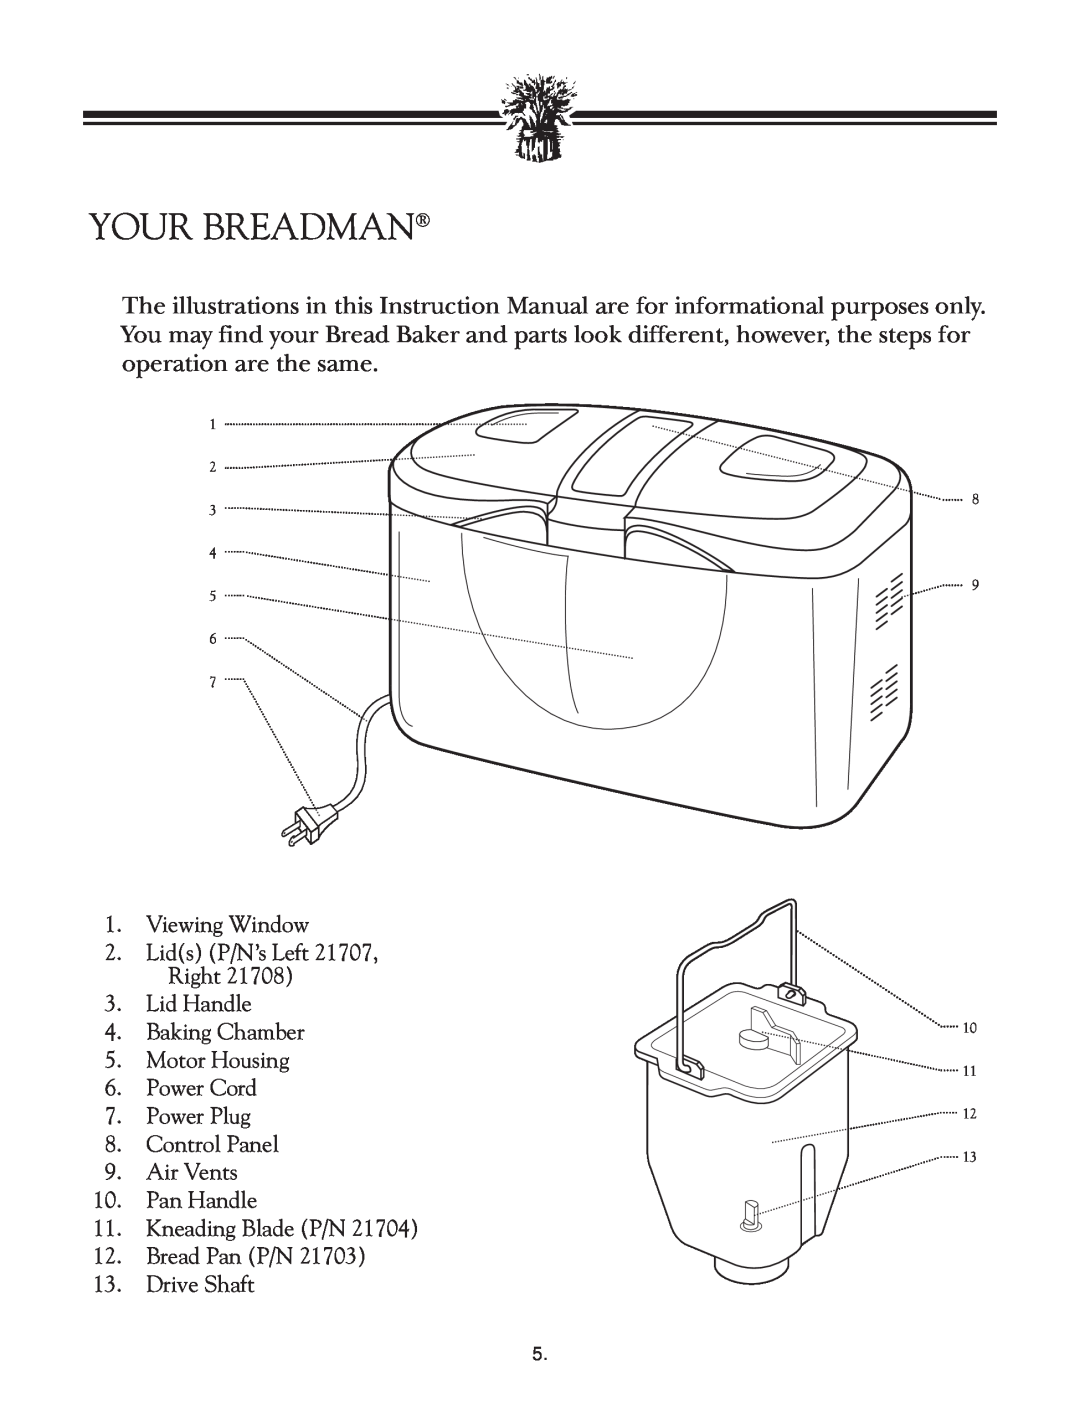 Breadman TR2828G instruction manual Your Breadman 